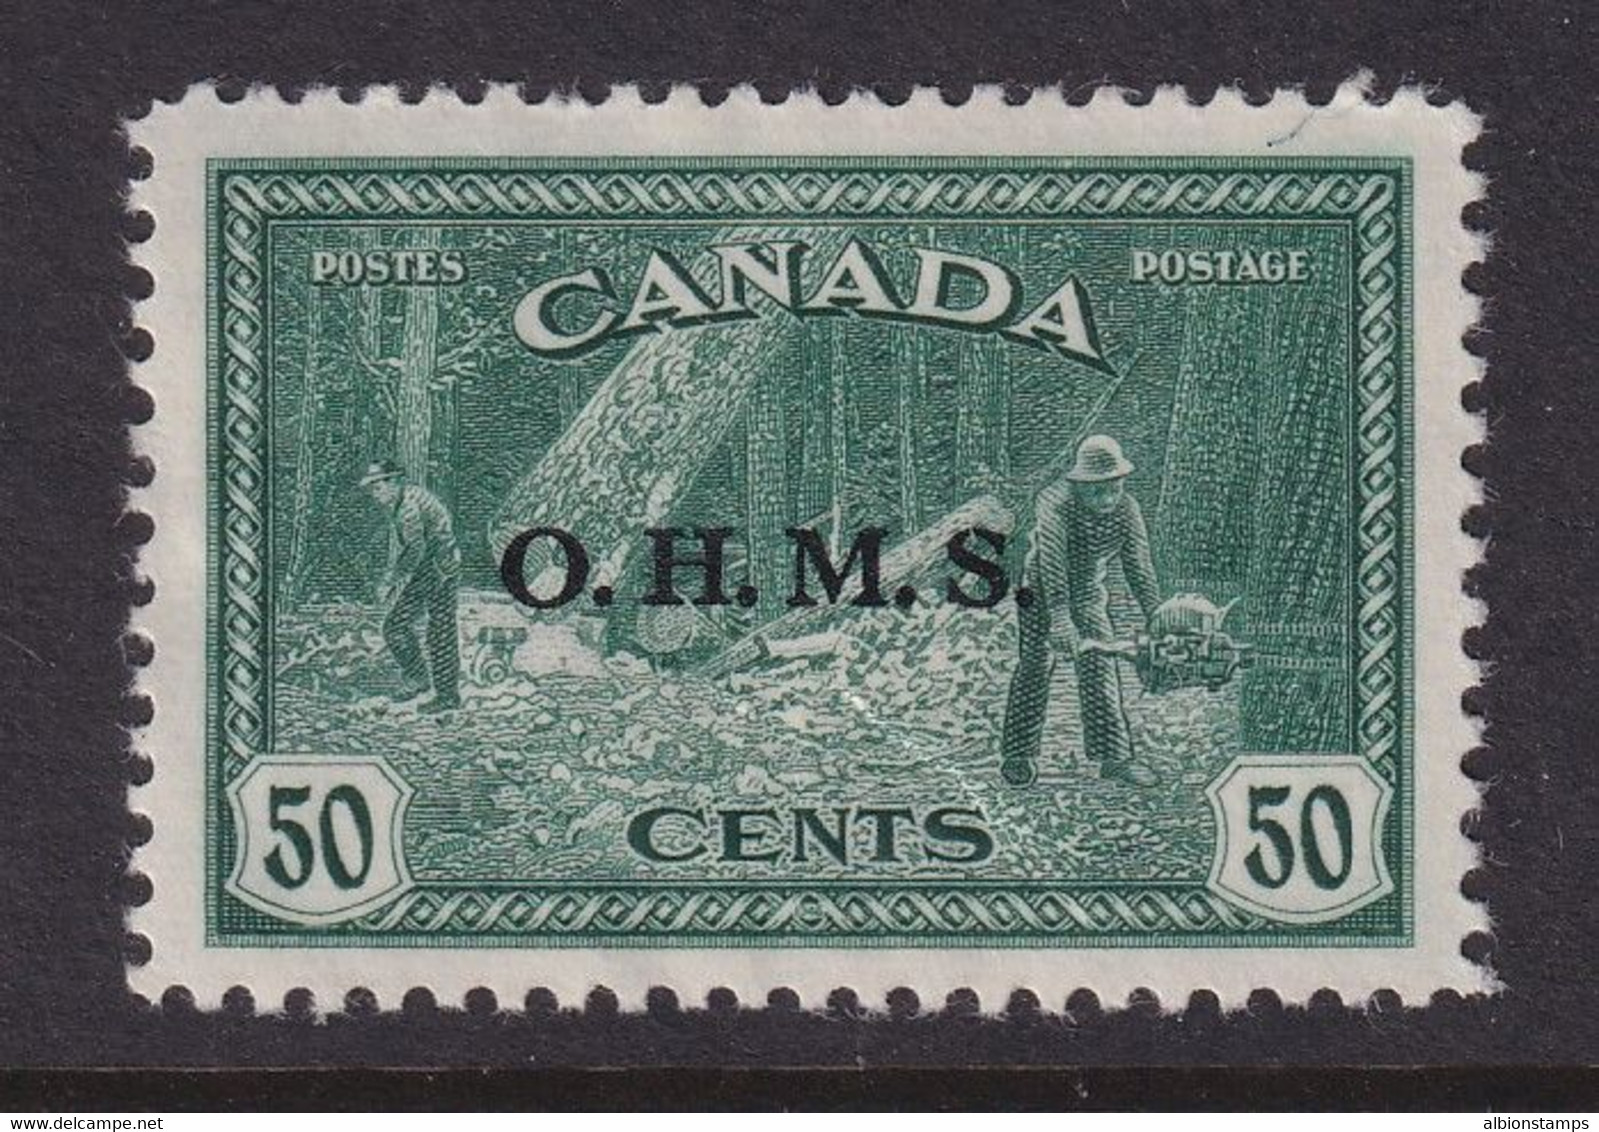 Canada, Scott O9, MHR - Overprinted